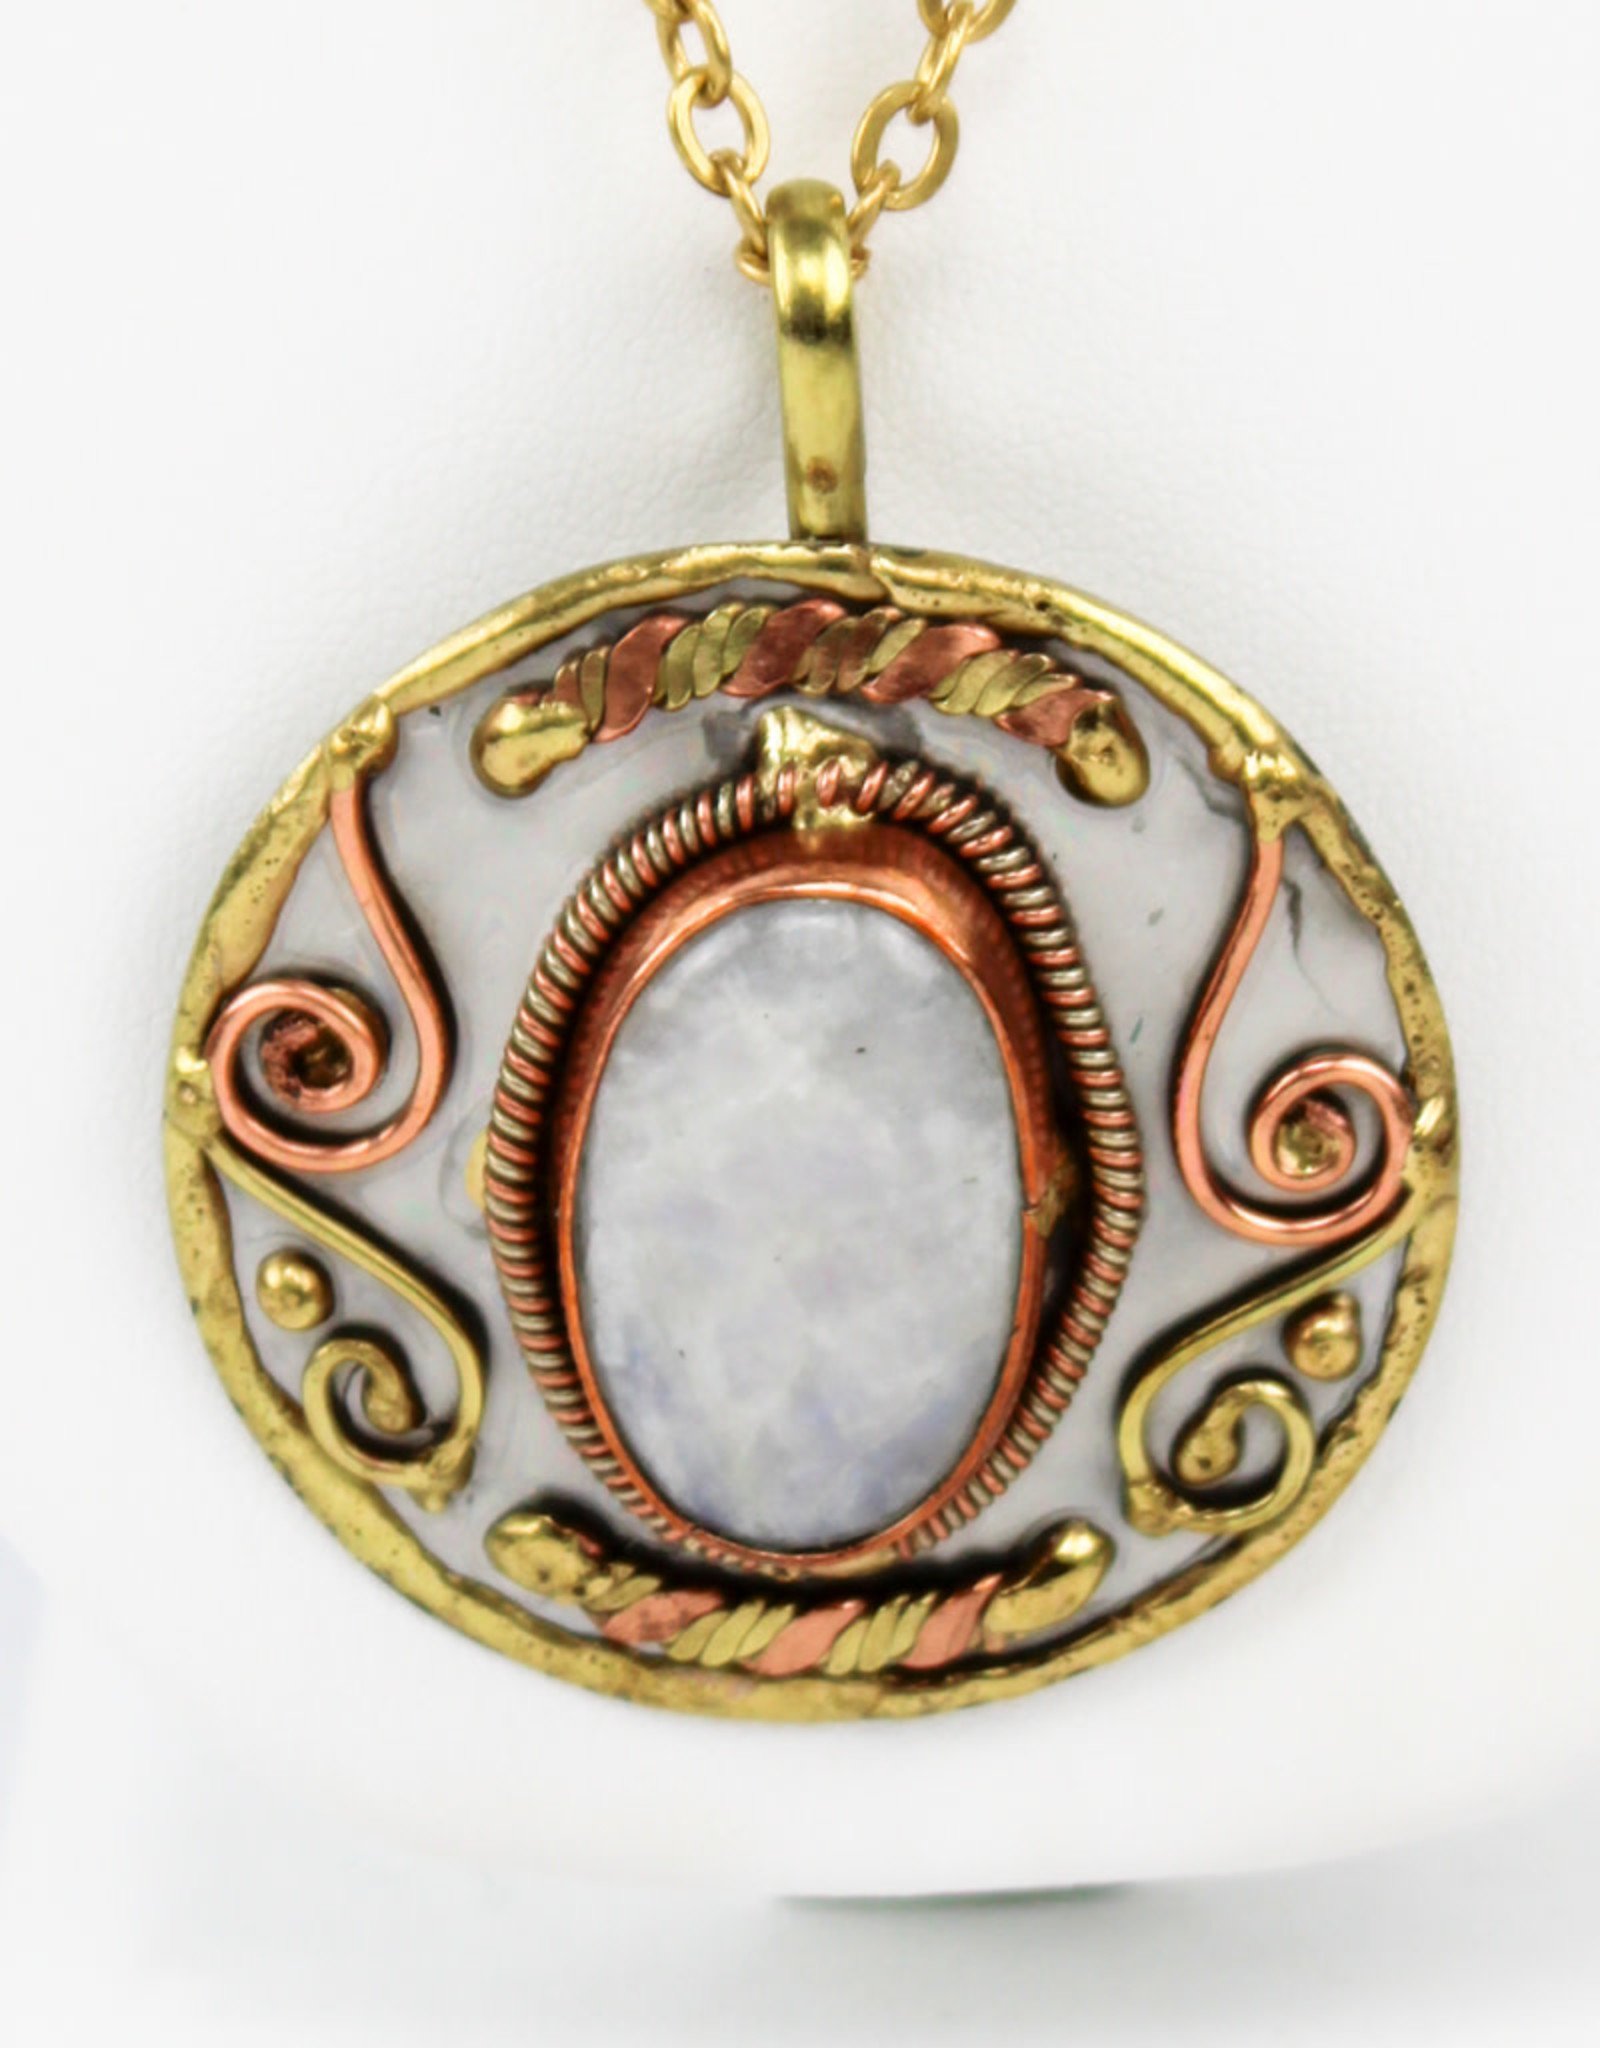 Anju Jewelry Mixed Metal Moonstone Necklace